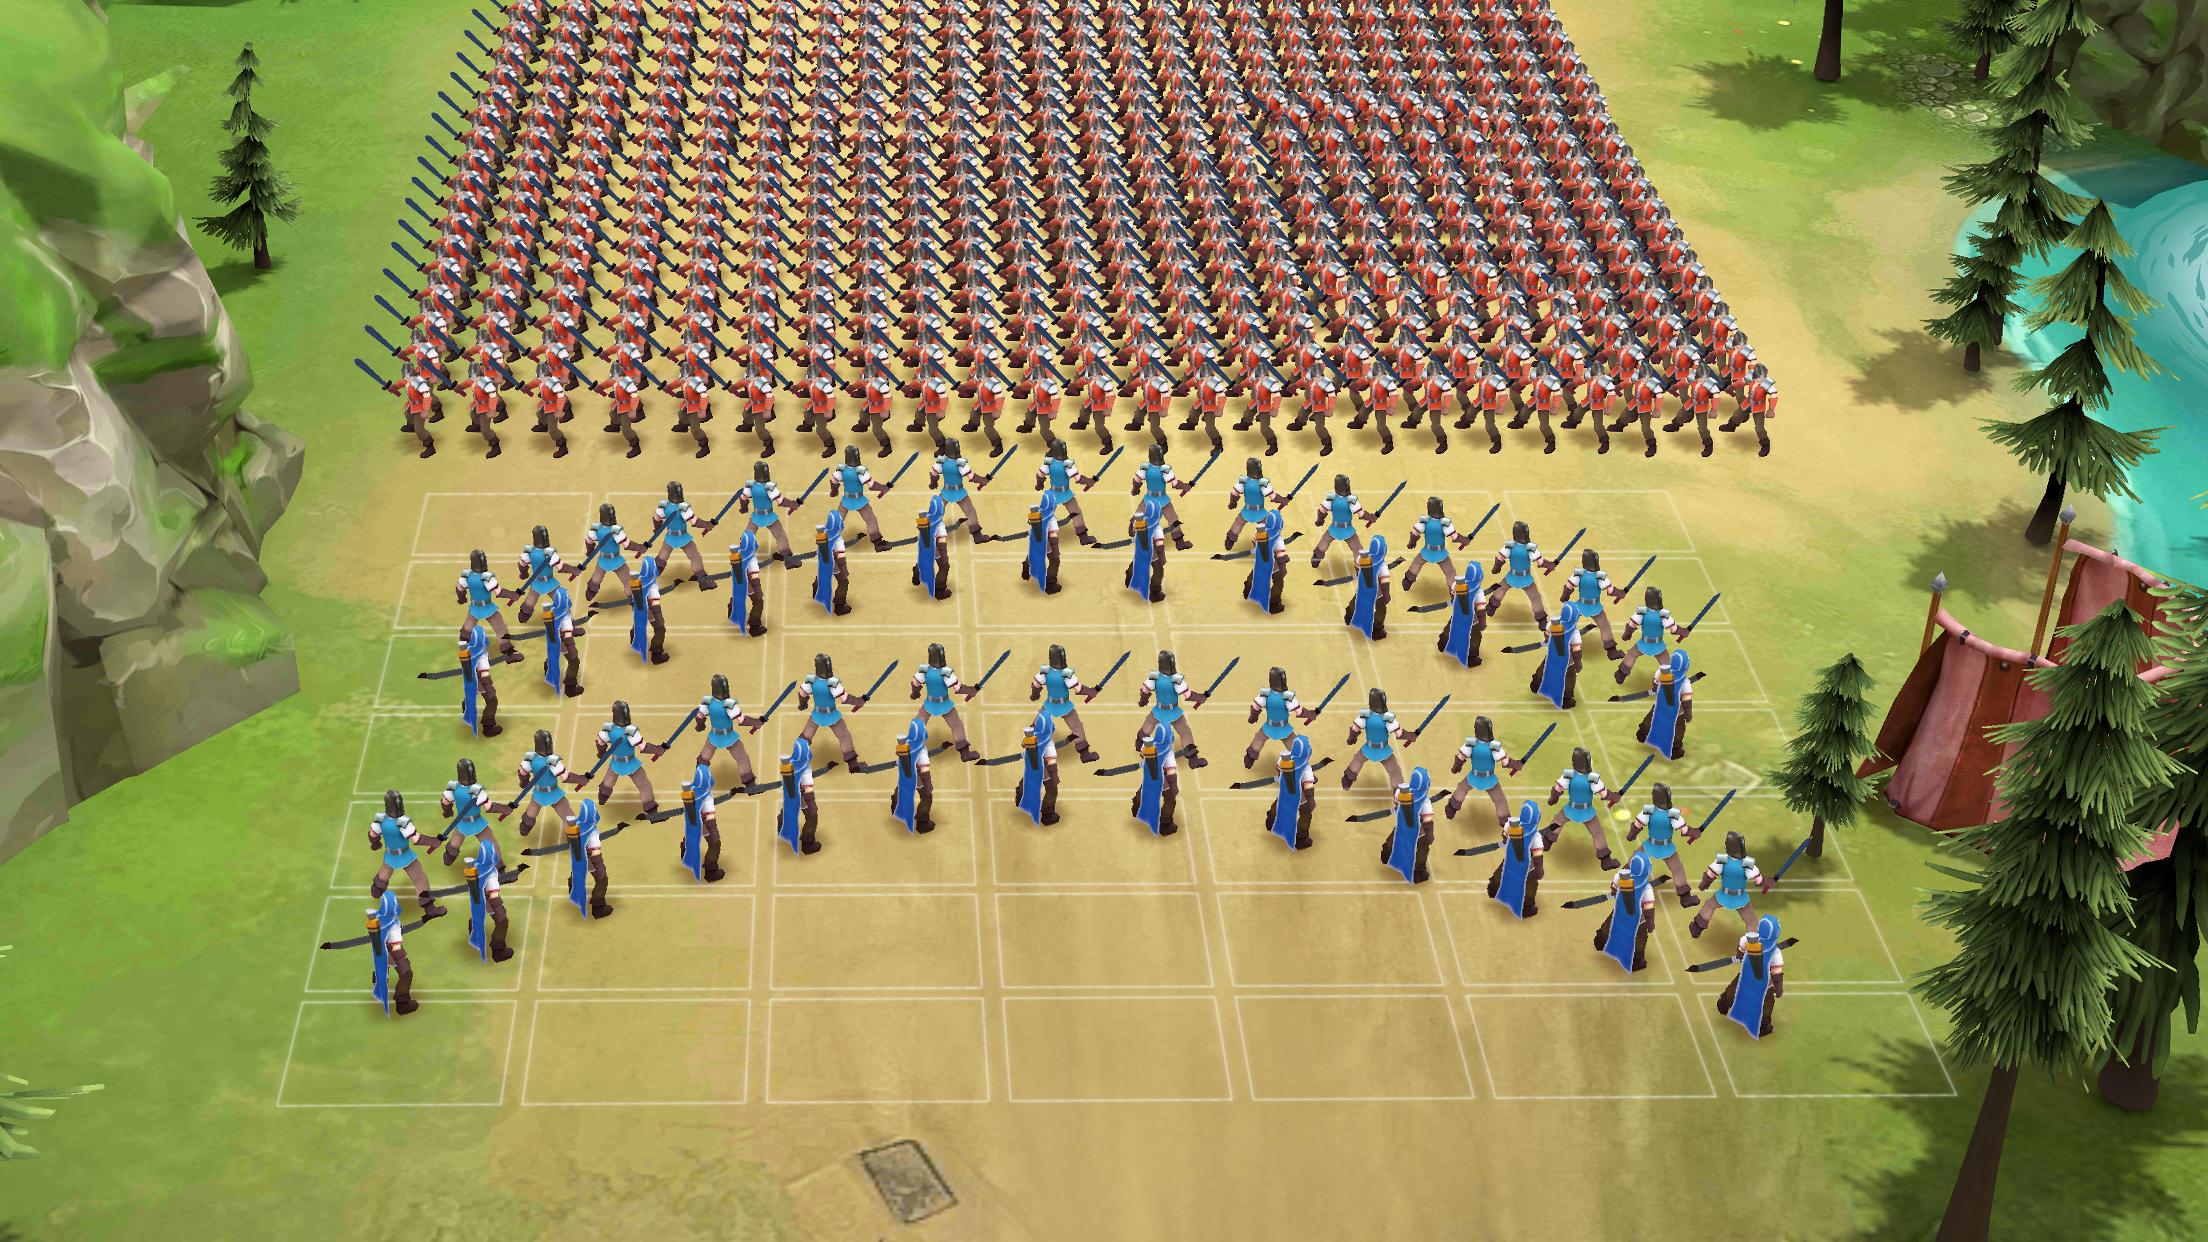 Download and play Kingdom Clash - Battle Sim on PC & Mac (Emulator)